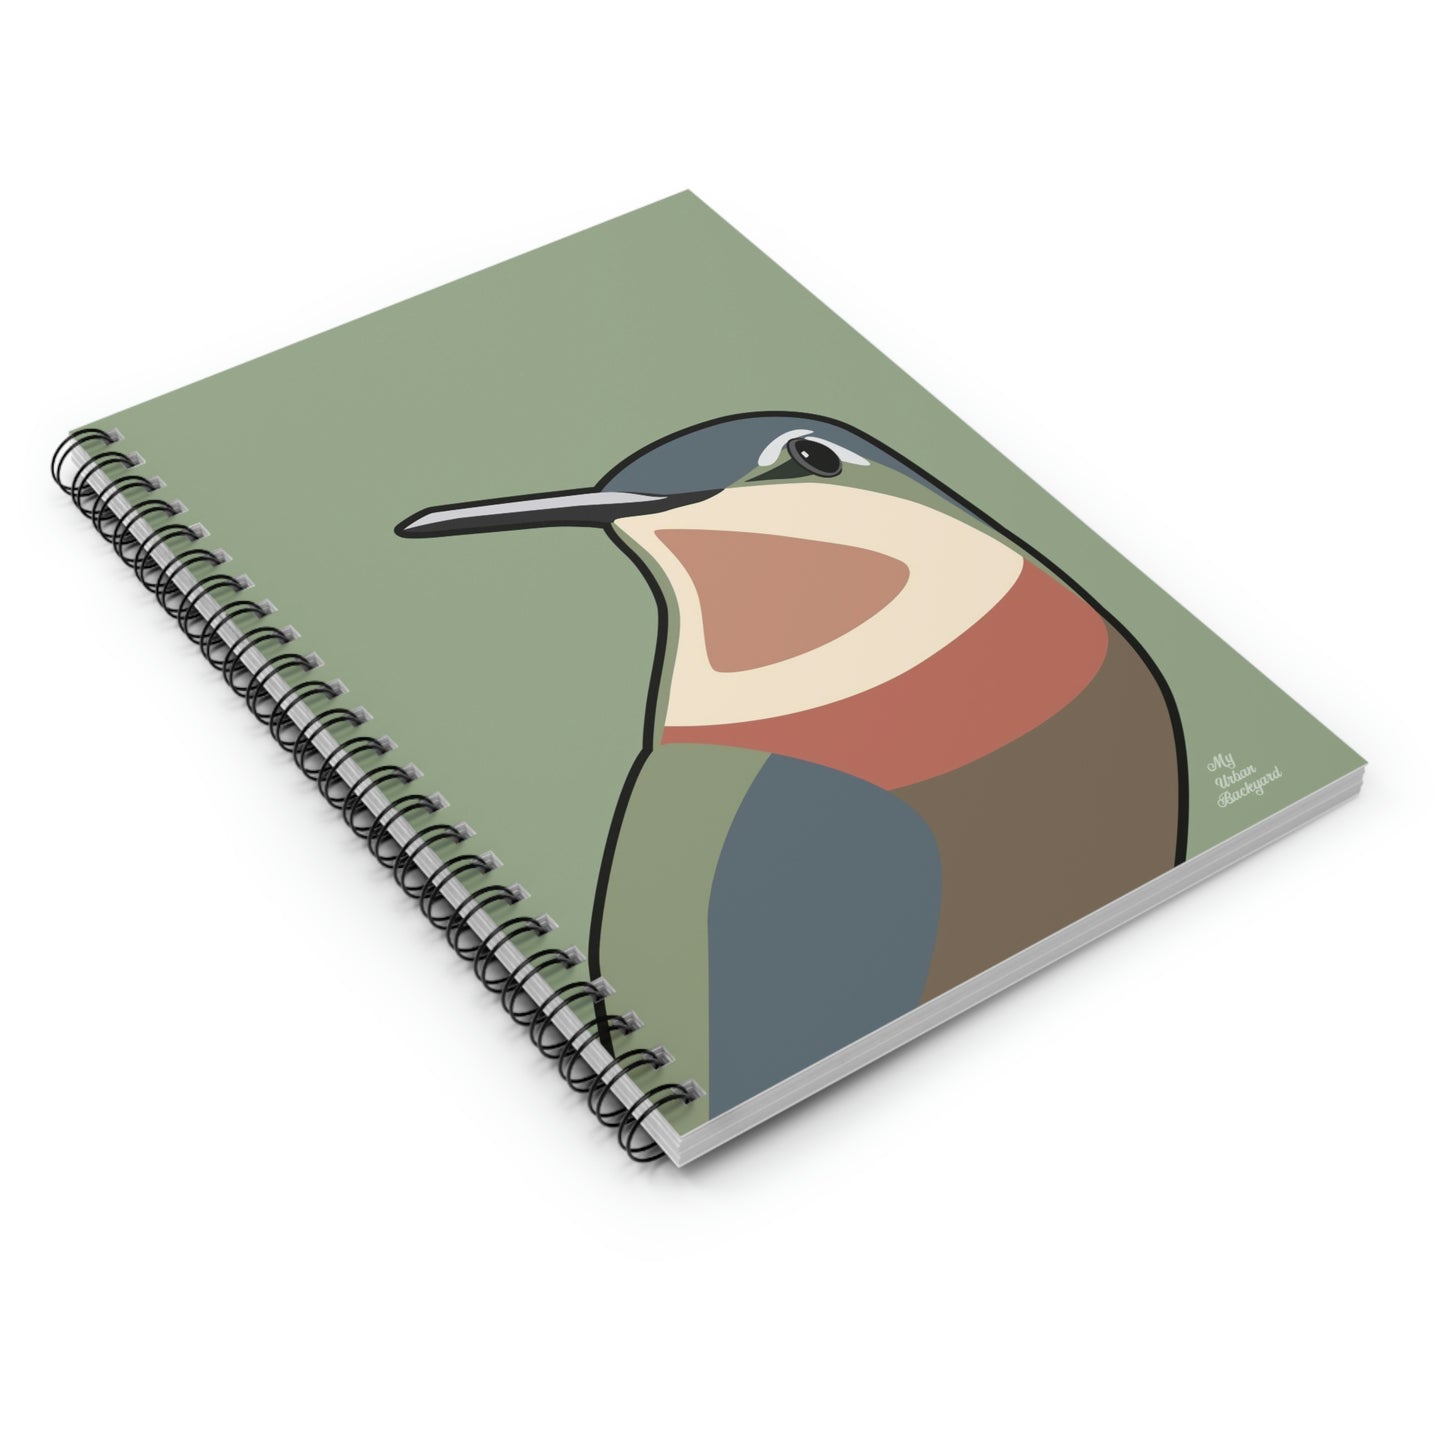 Hummingbird on Sage Green, Spiral Notebook Journal - Write in Style